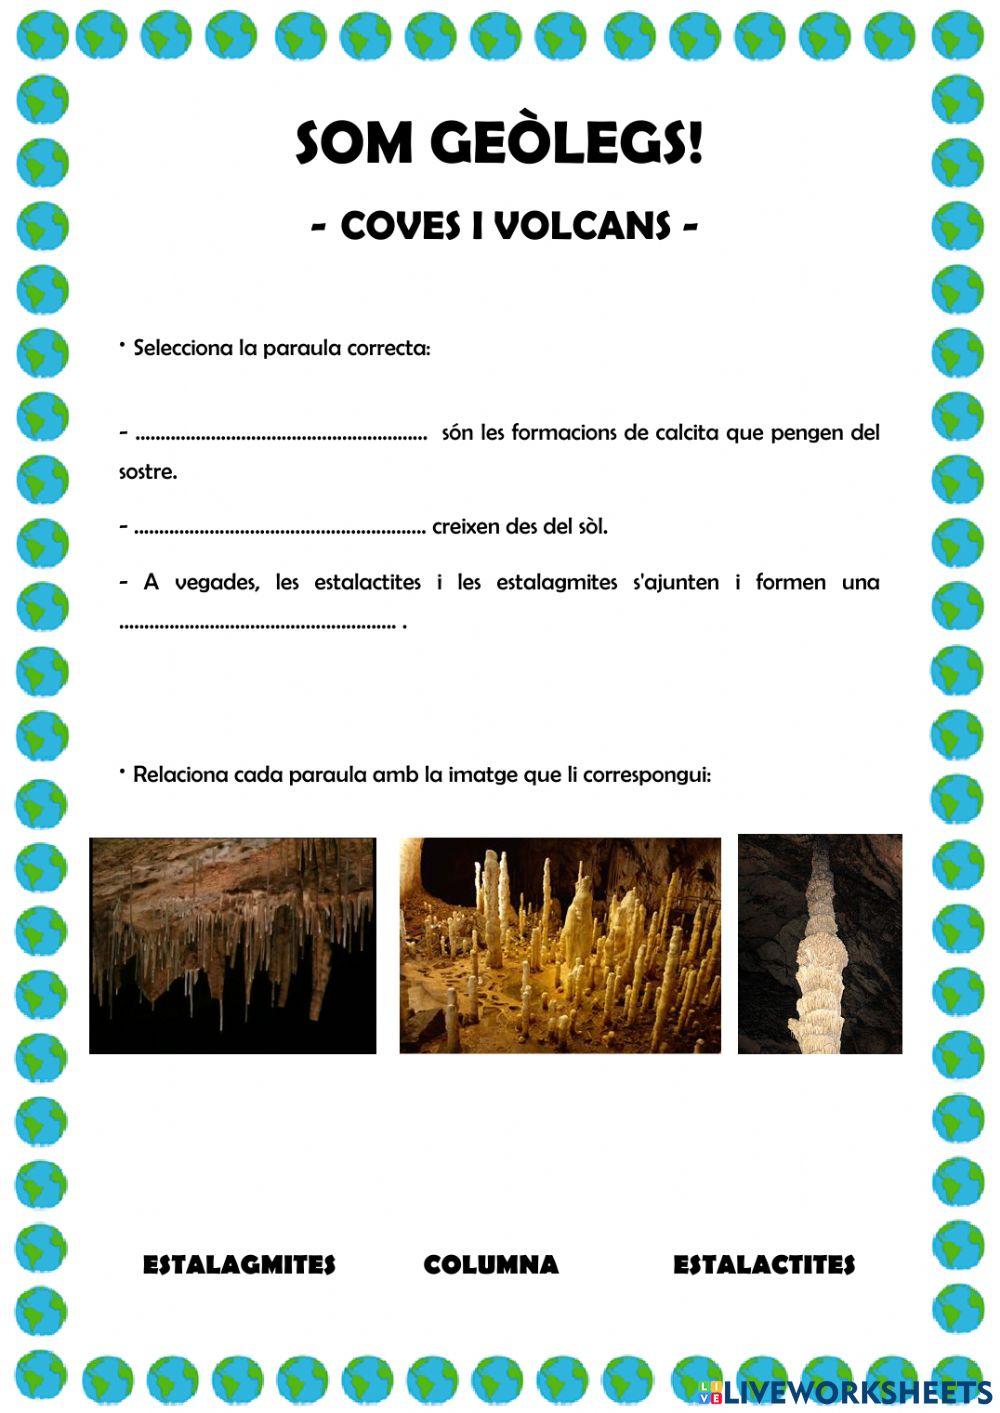 Som geòlegs: coves i volcans